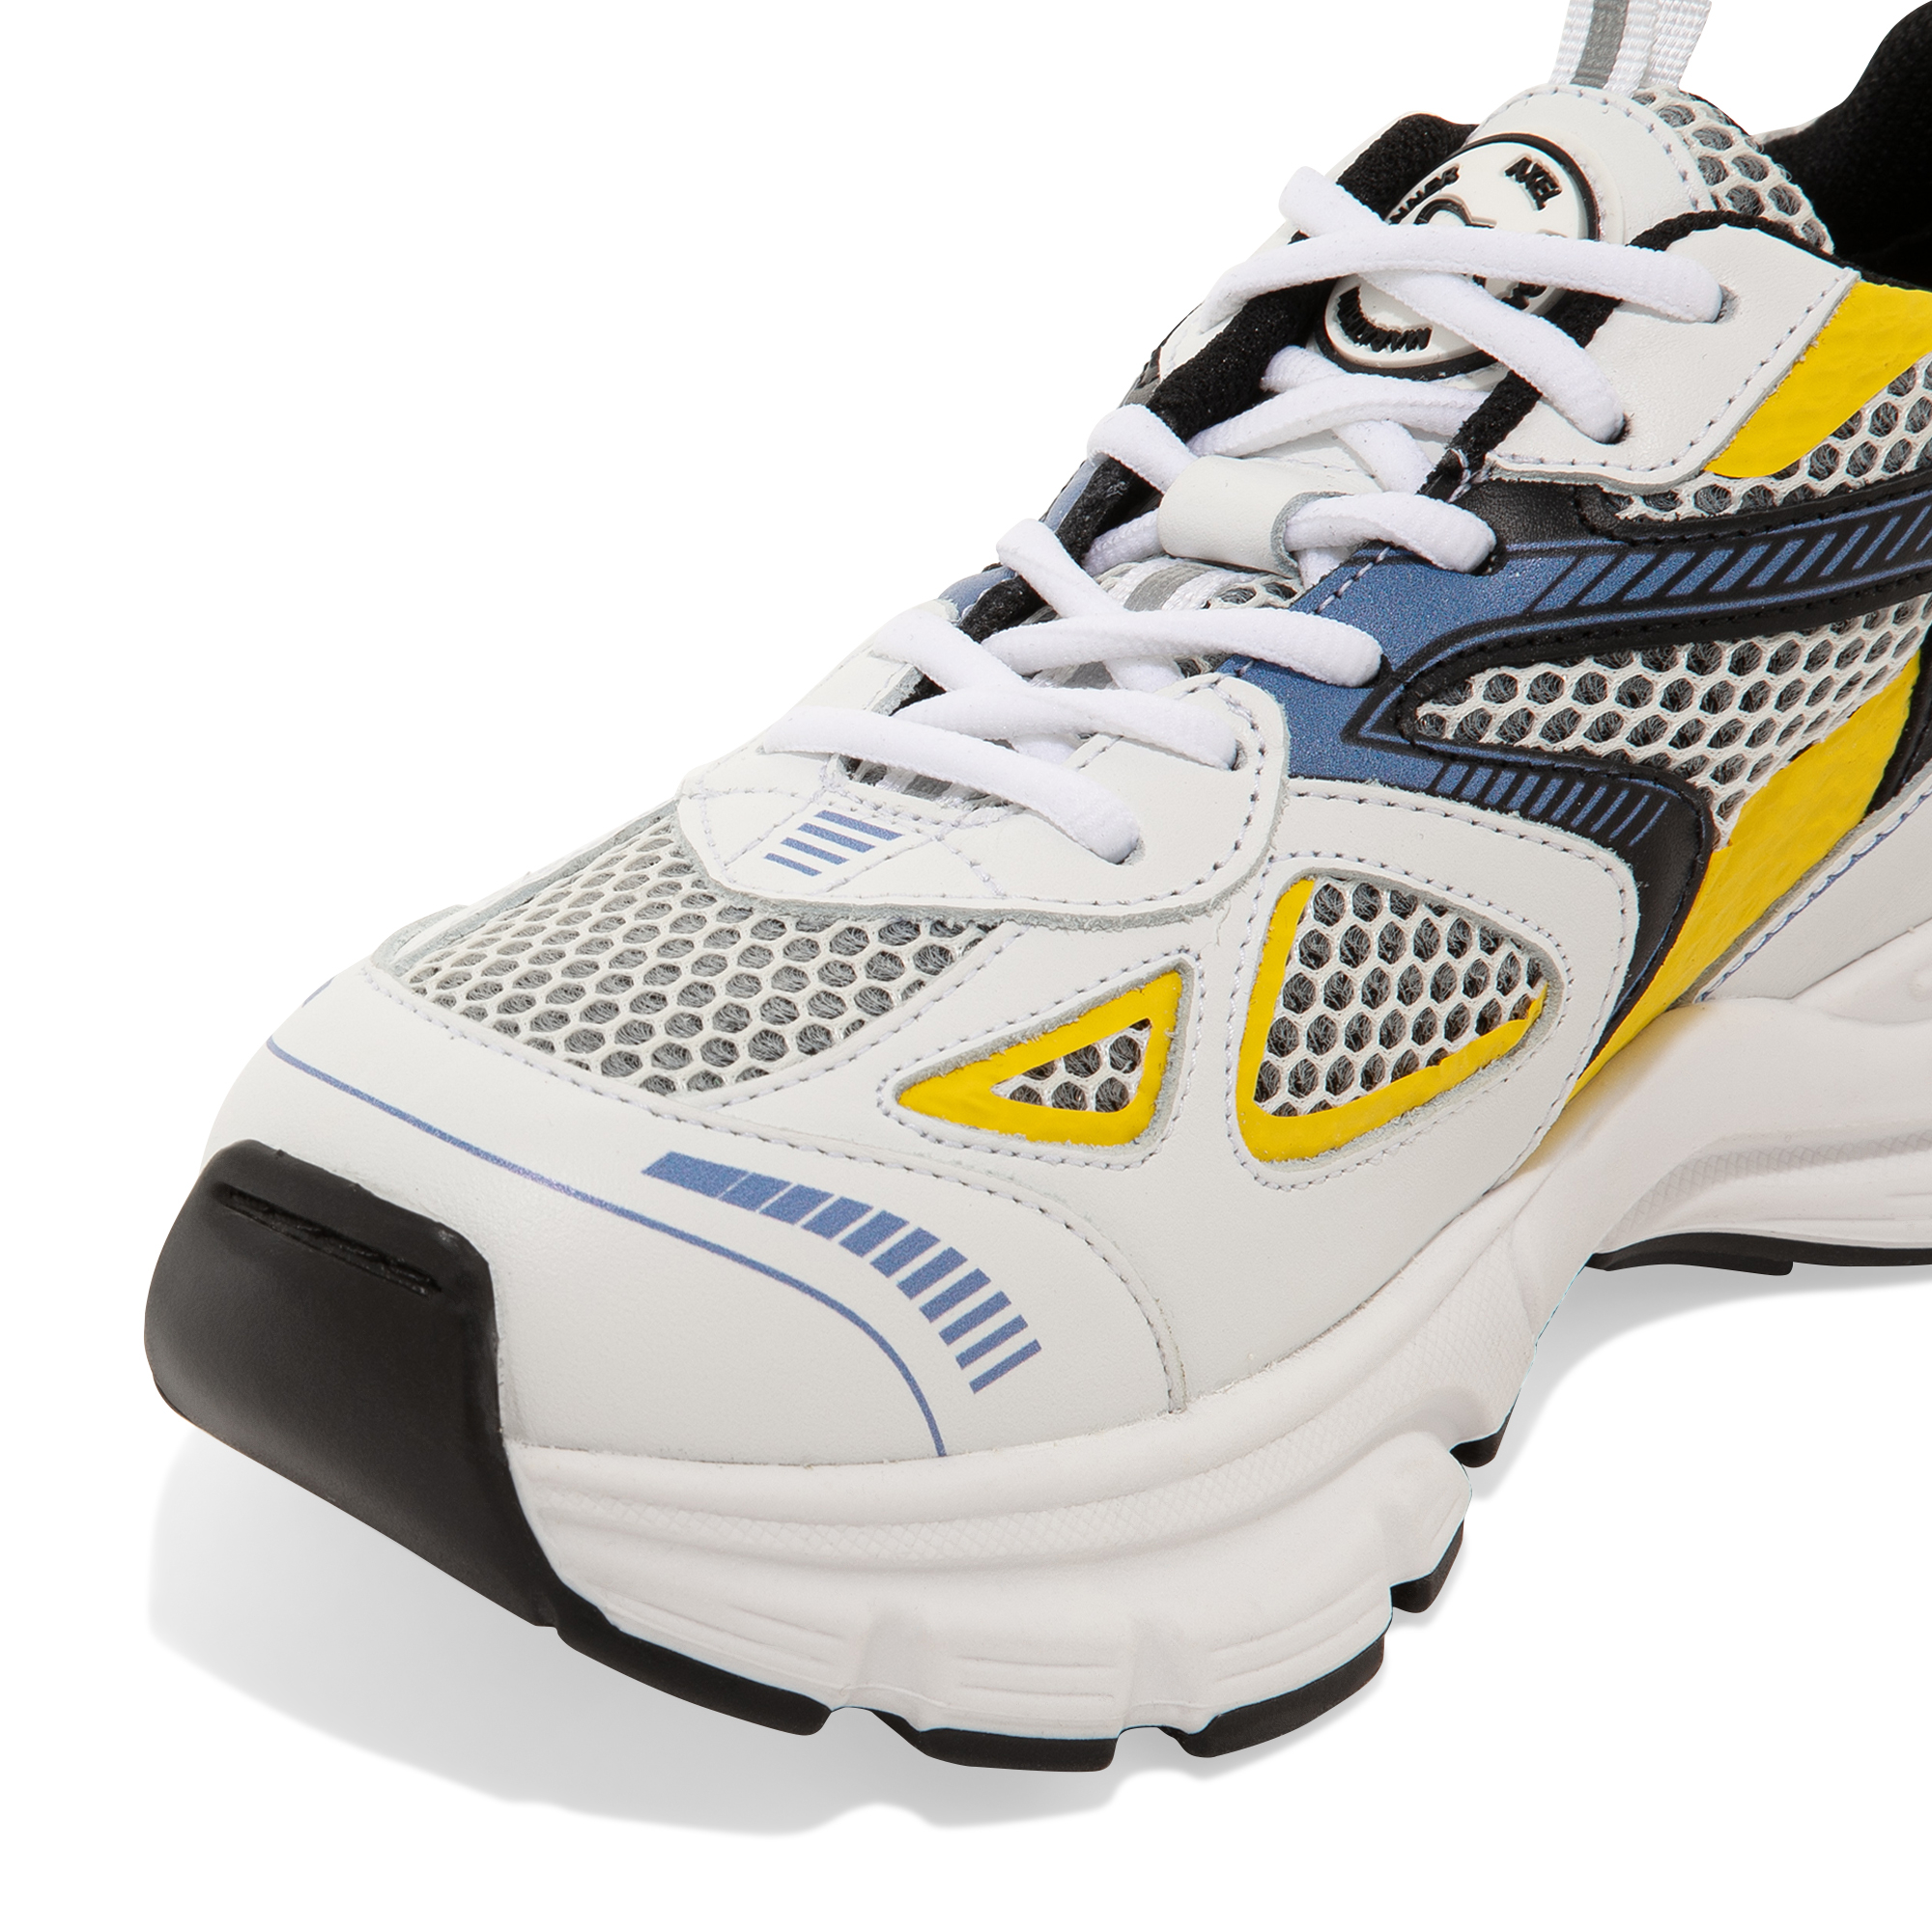 Axel Arigato Marathon Runner sneakers for Women - Yellow in KSA 